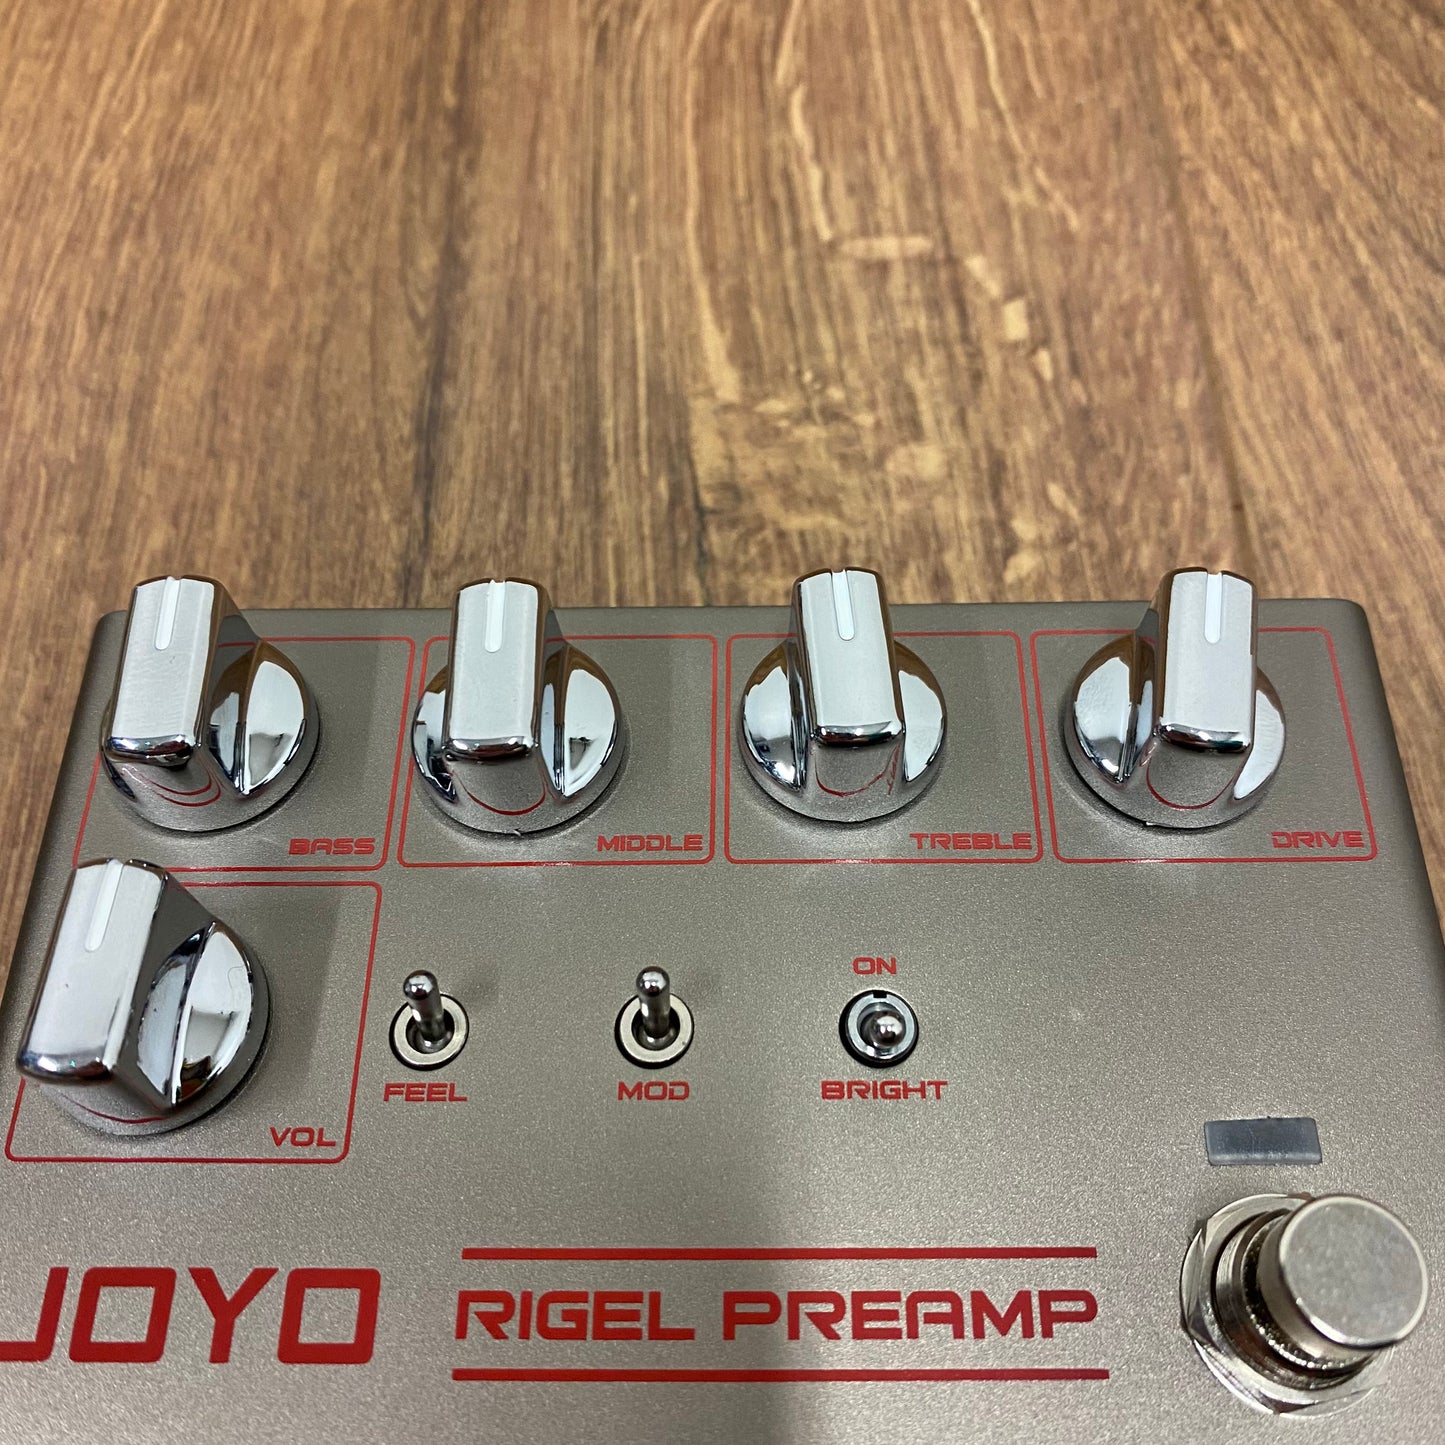 Pre-Owned Joyo R-24 Rigel Preamp Pedal